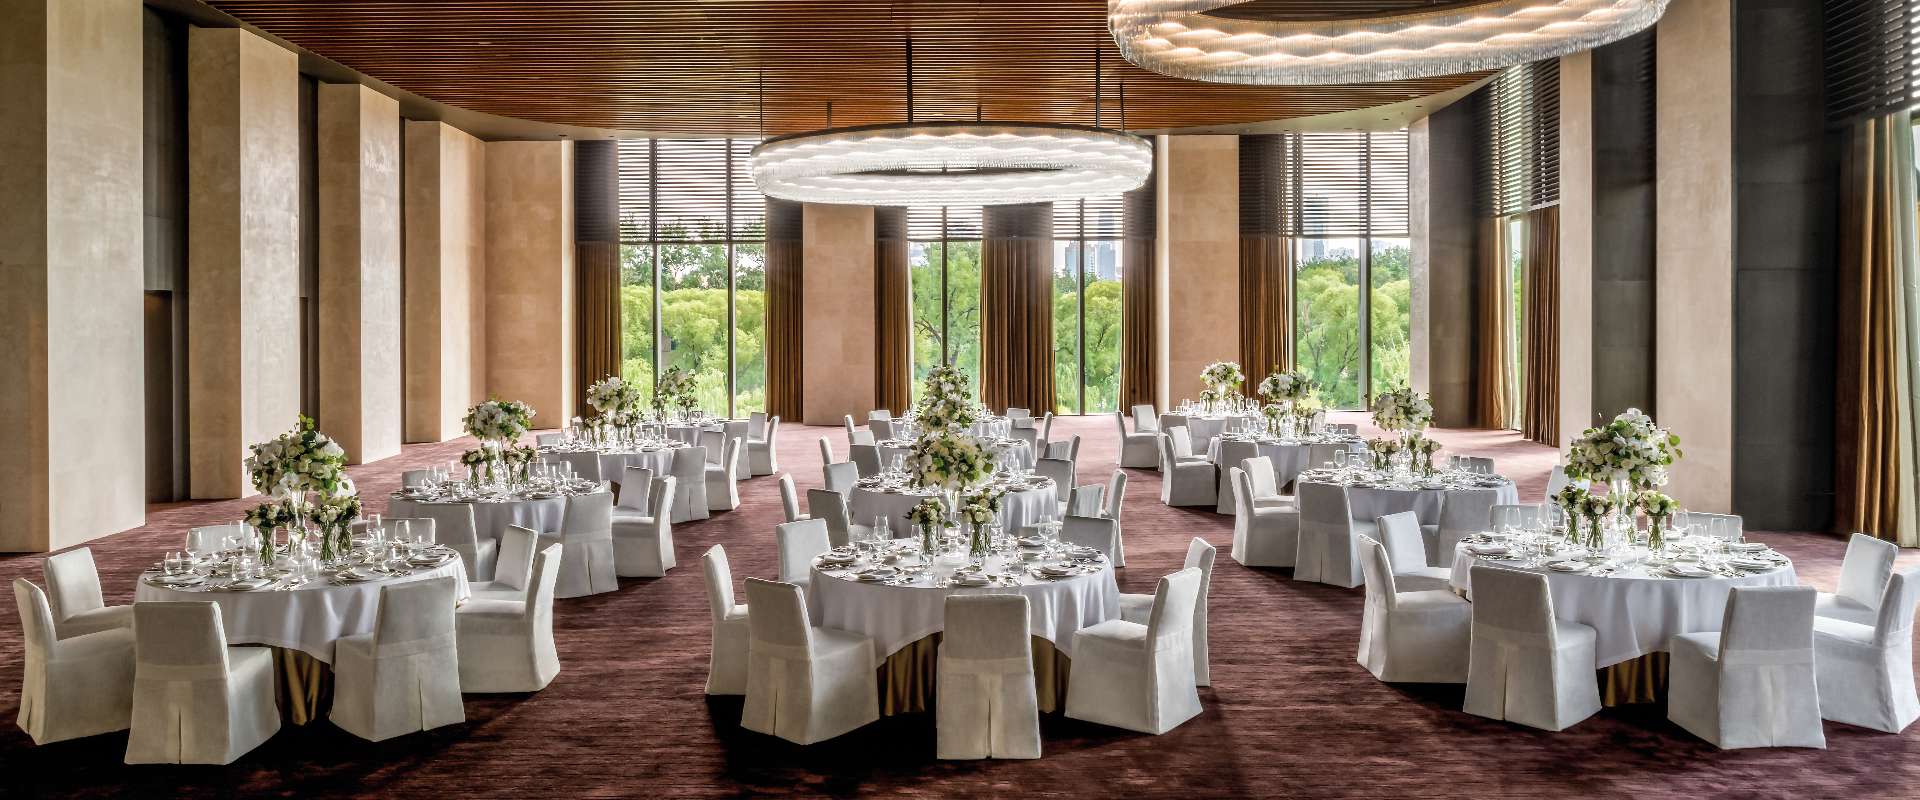 Meeting Rooms and Ballrooms at The Bvlgari Hotel Beijing